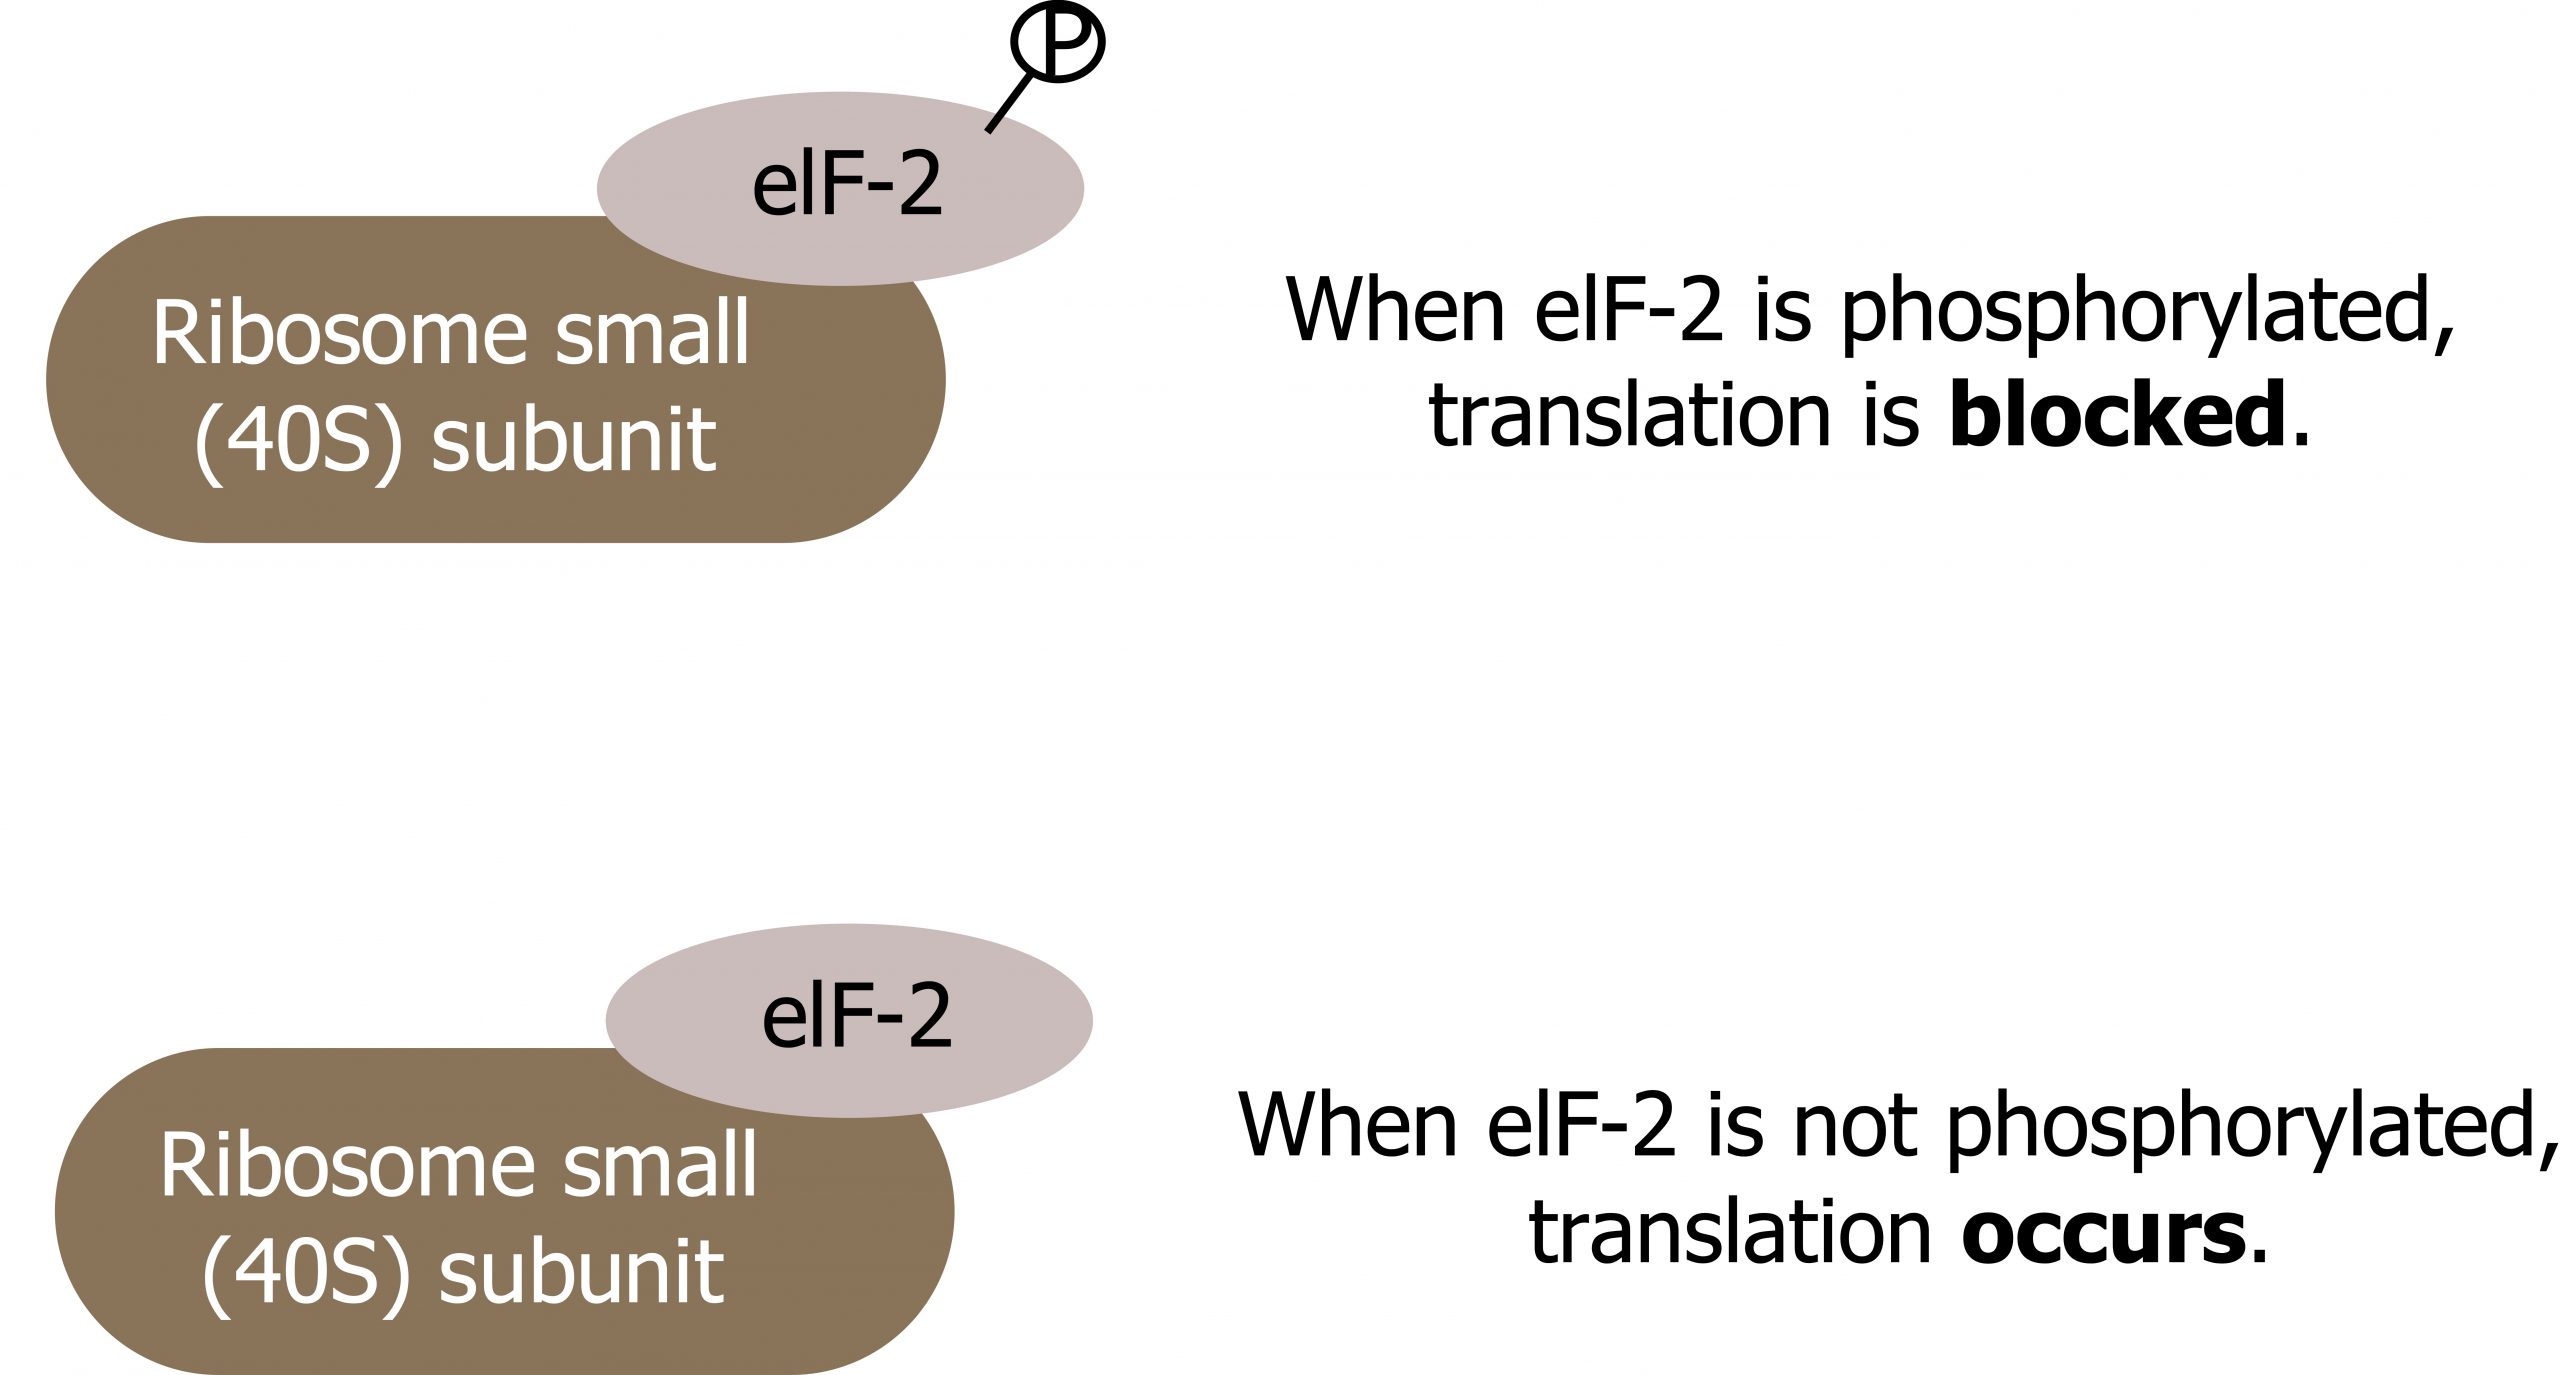 When eIF-2 is phosphorylated, translation is blocked. When eIF-2 is not phosphorylated, translation occurs.